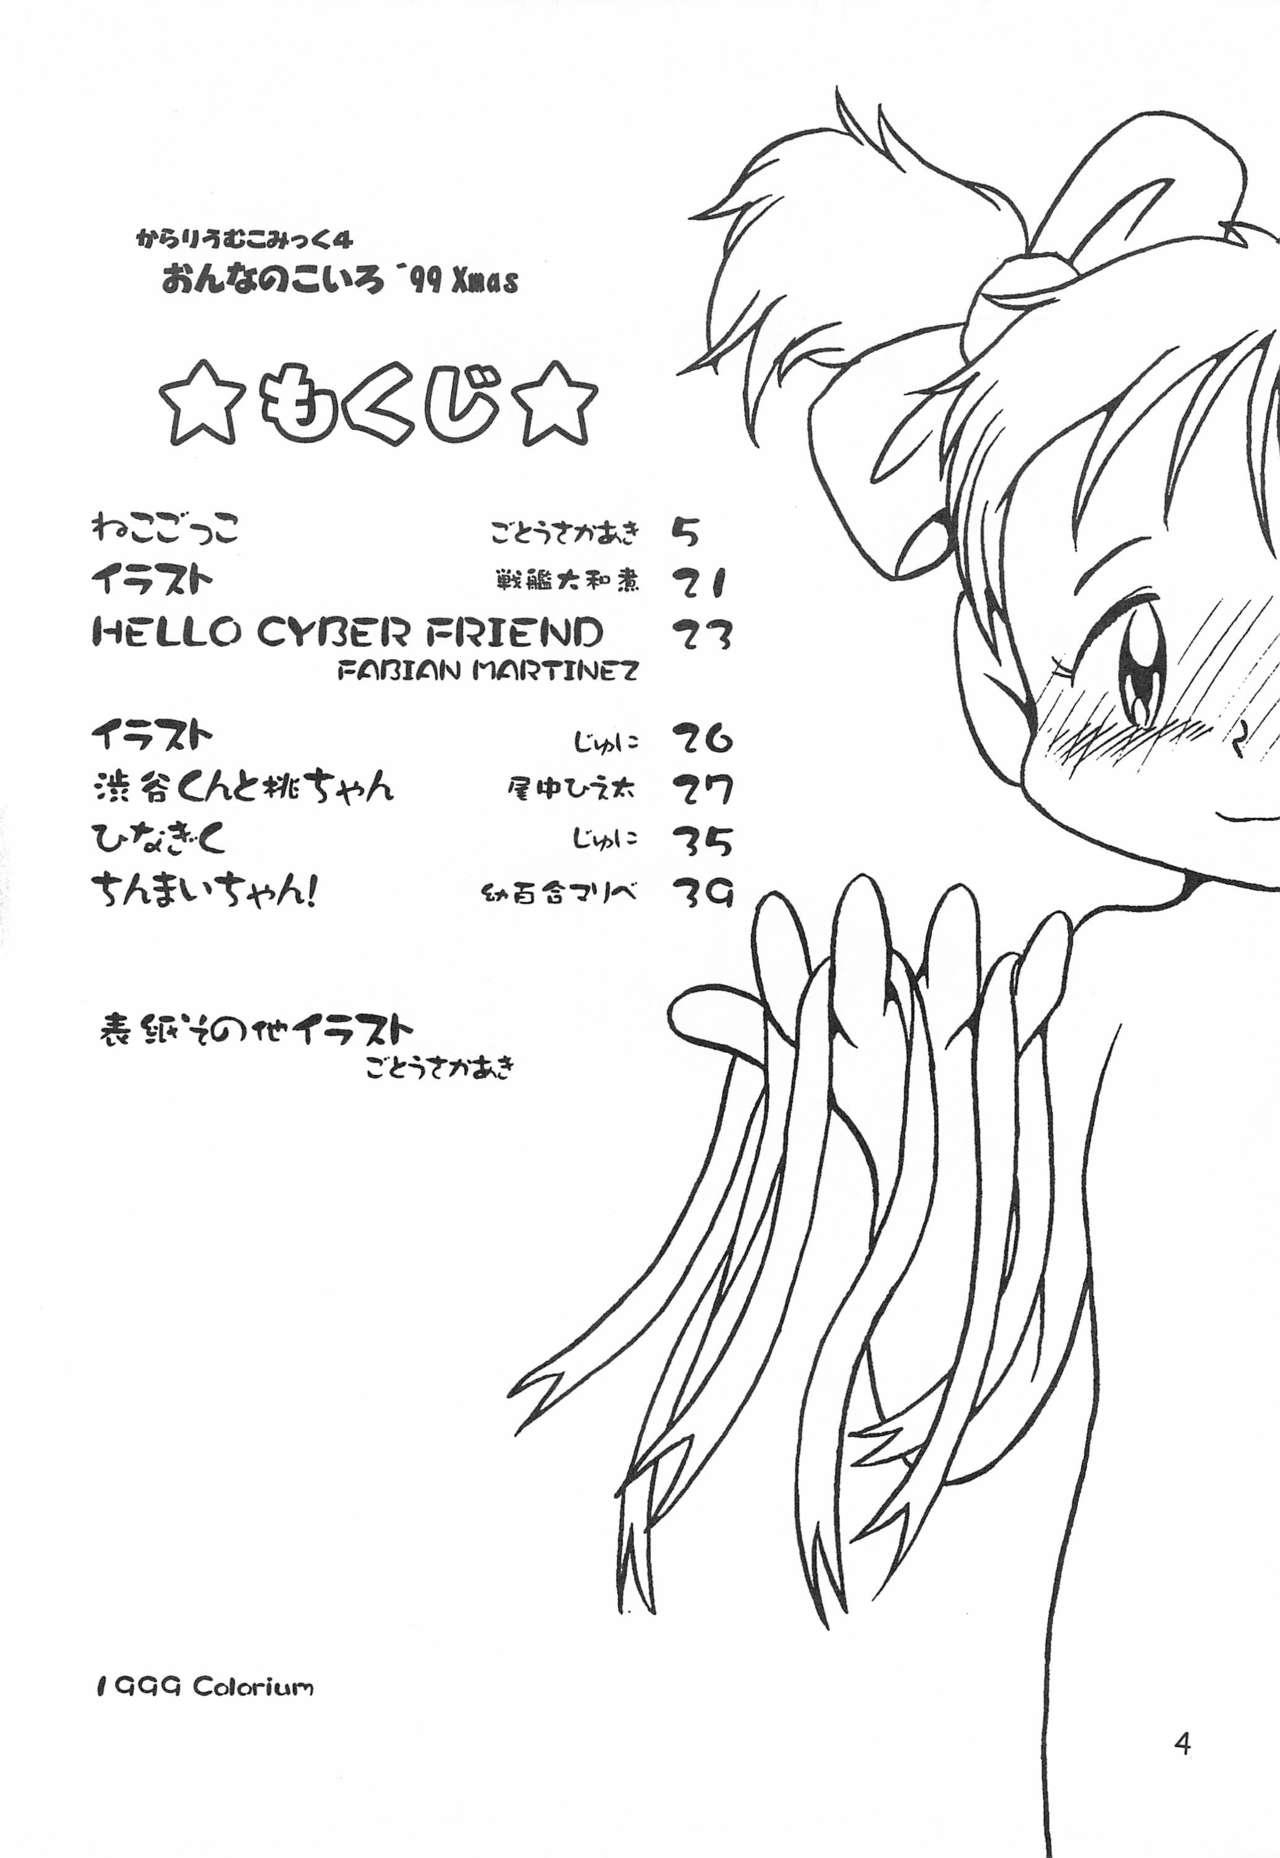 Hot Naked Women Colorium Comic 4 Onna no ko Iro '99 Xmas - Original Moan - Page 6